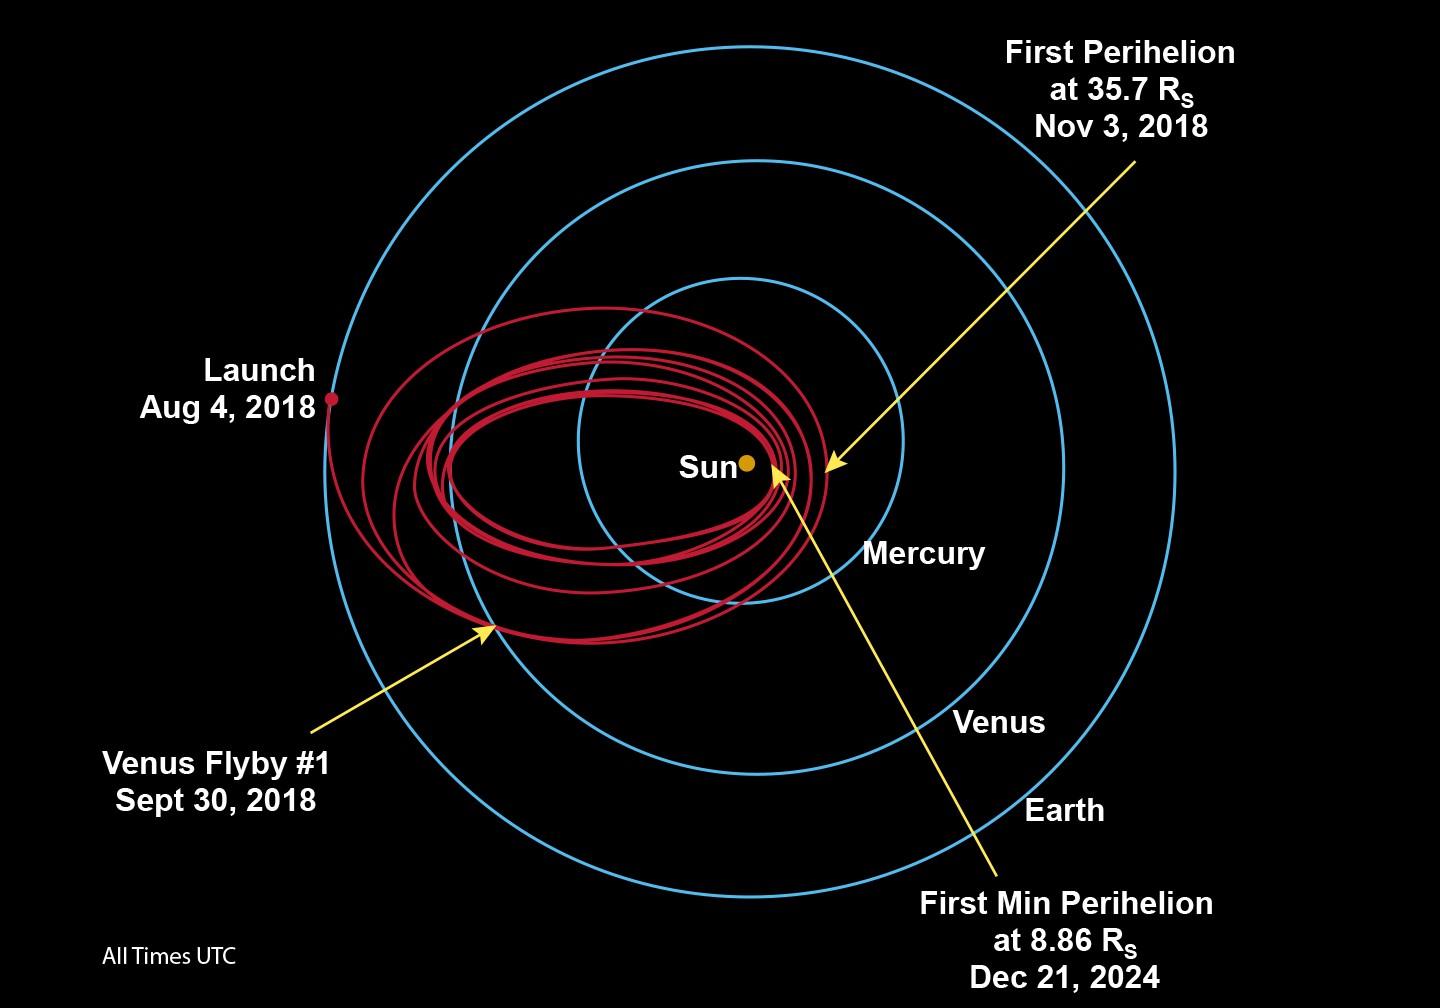 The journey of the Parker Solar Probe. Image: NASA